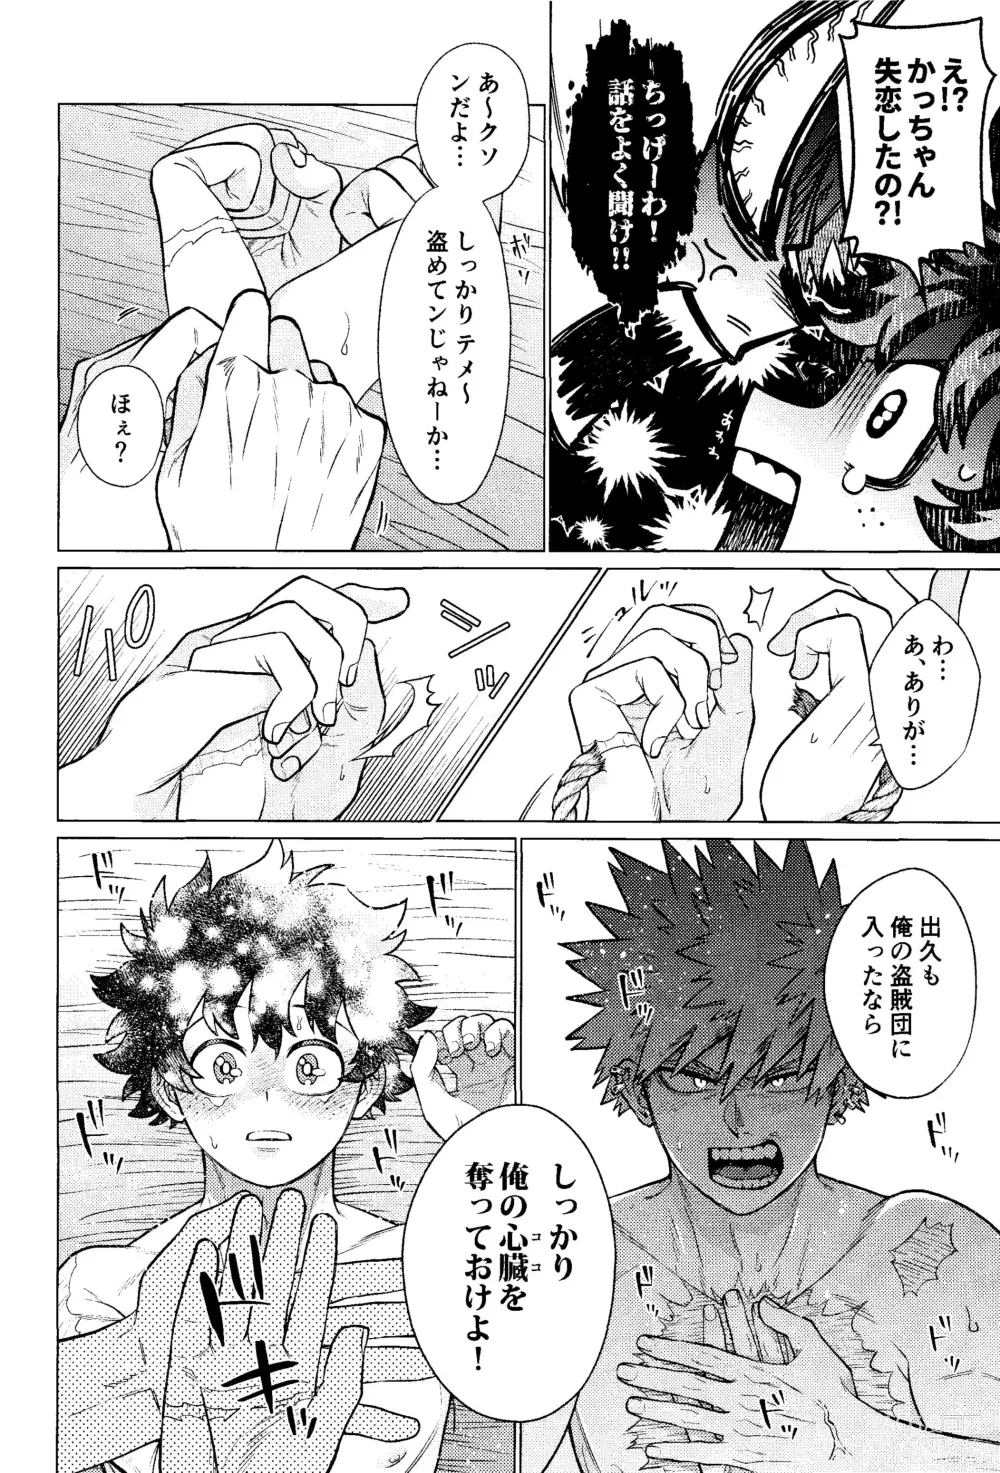 Page 35 of doujinshi Ubatte Nusumareru - Robbed and stolen